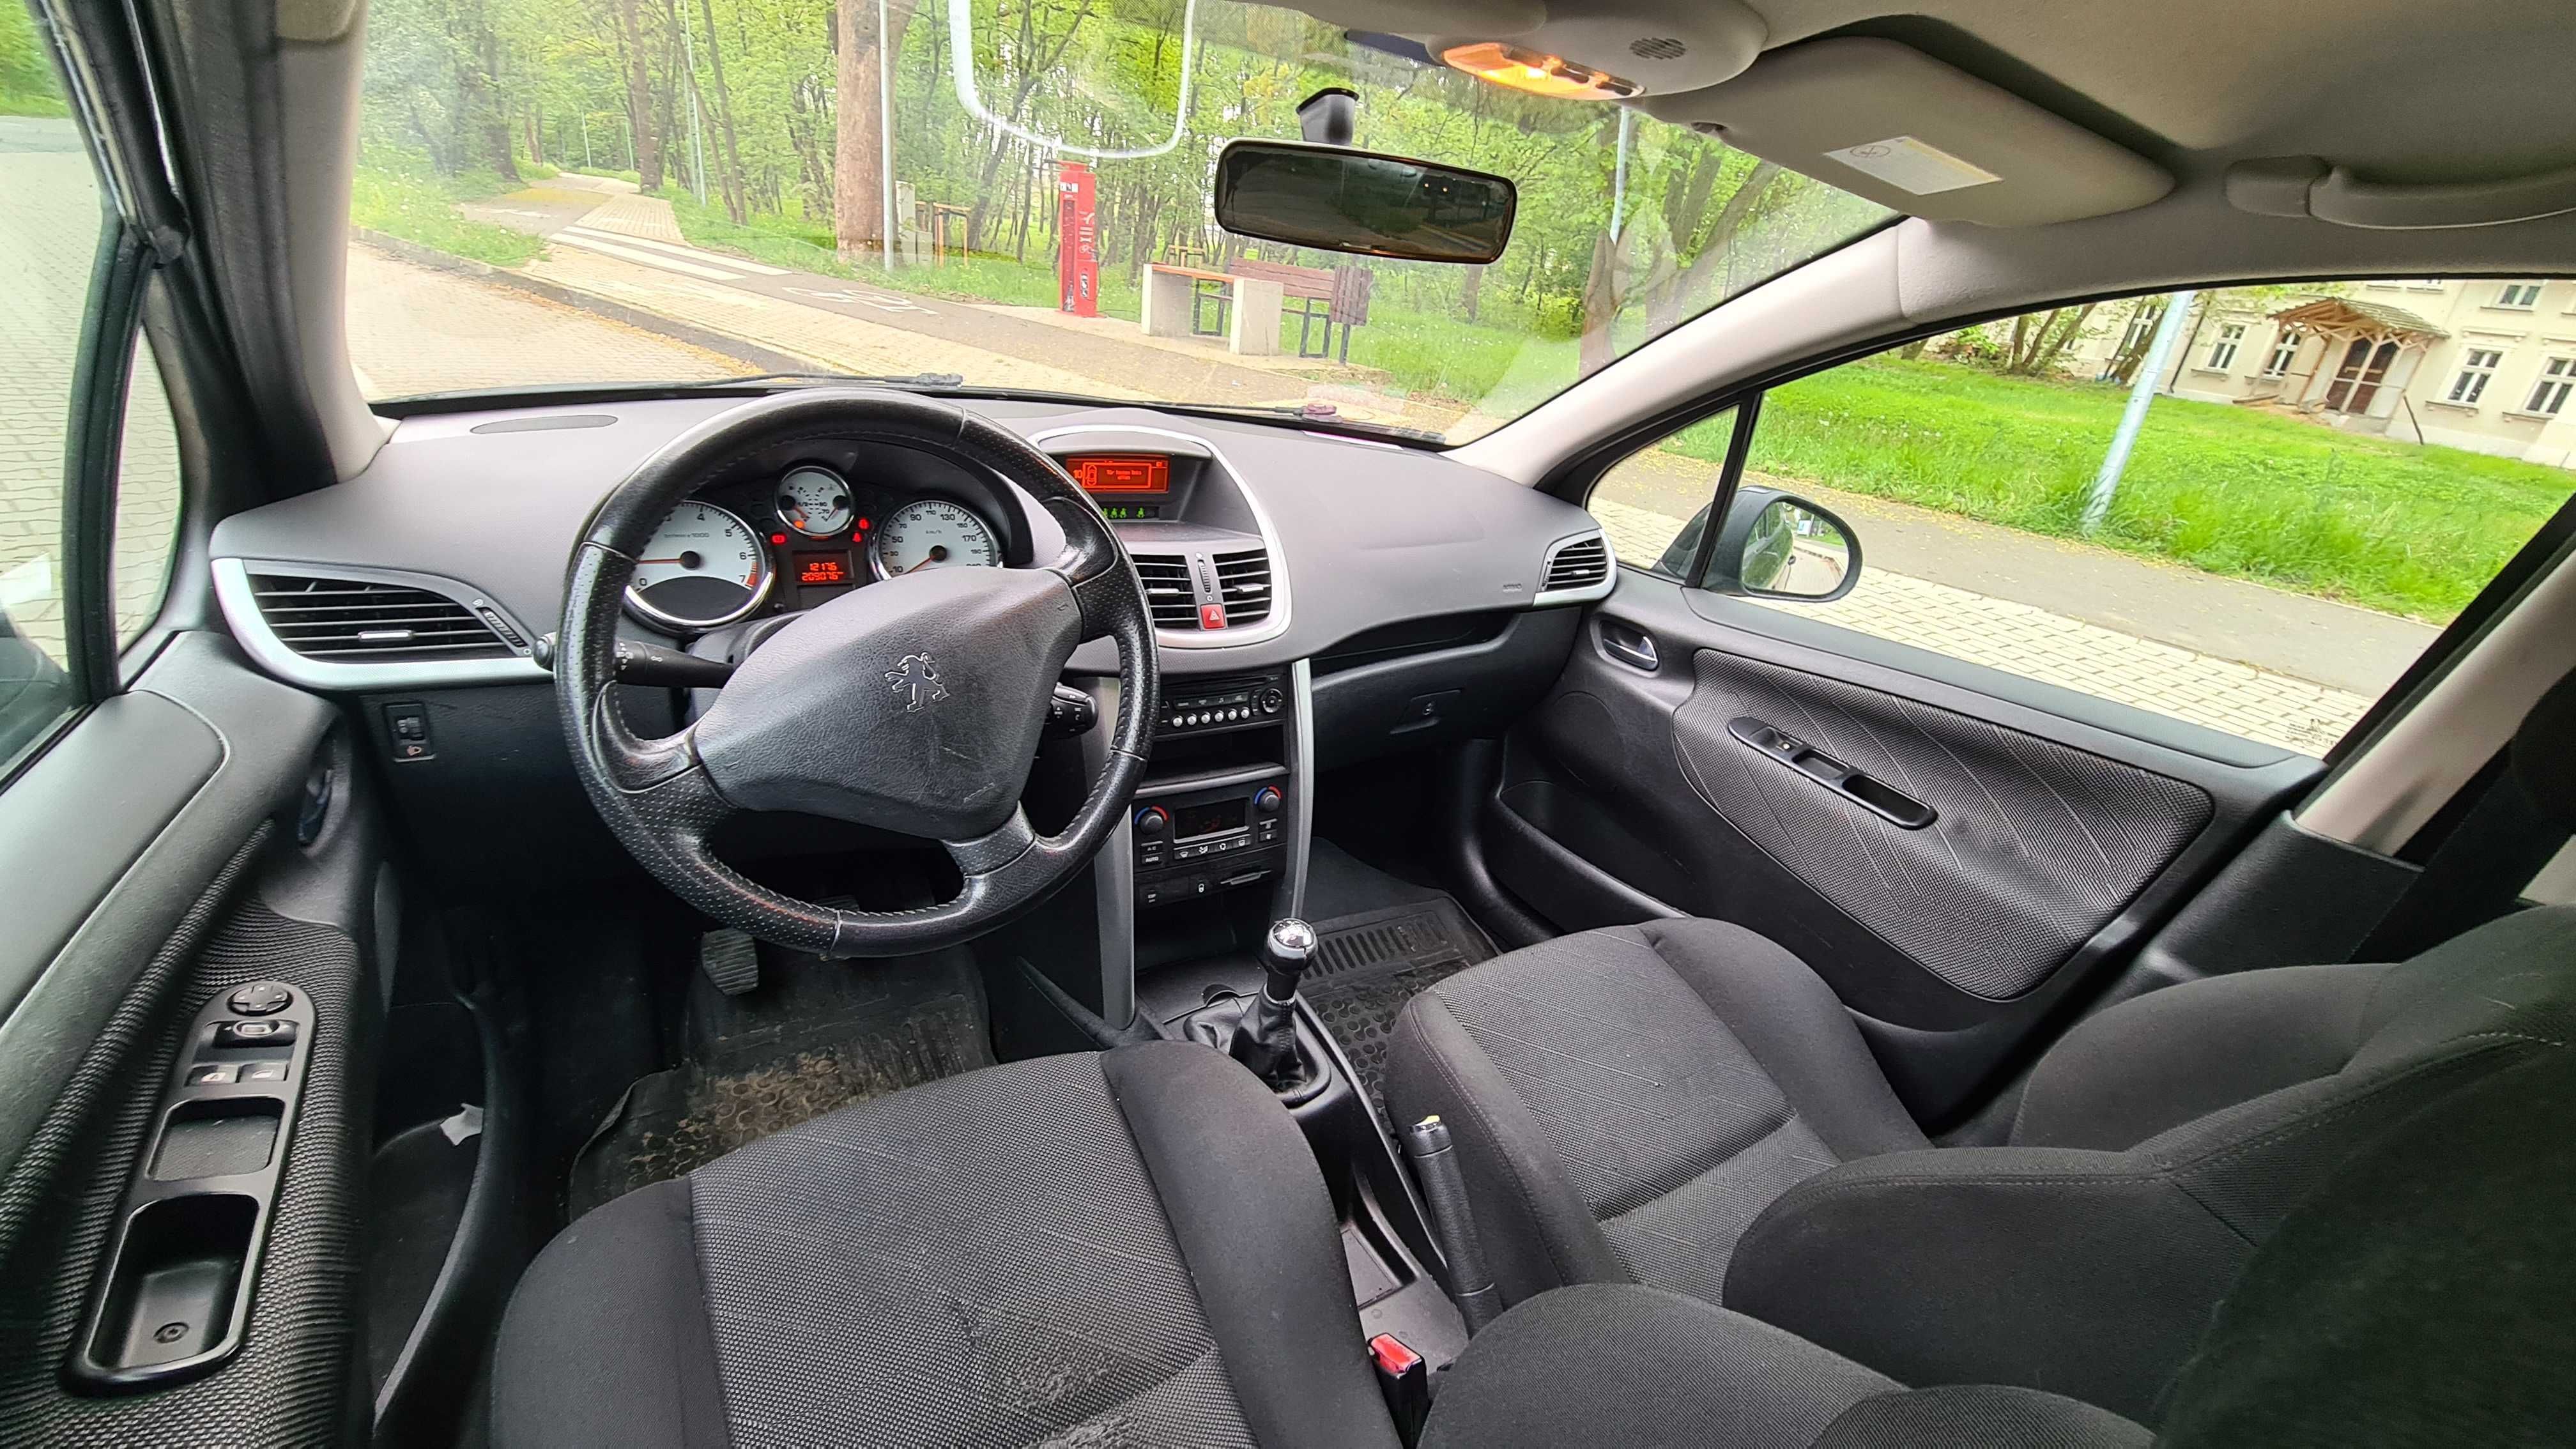 # Peugeot 207 # 5 Drzwi # 1.6 110 KM # Klimatronik # Alu